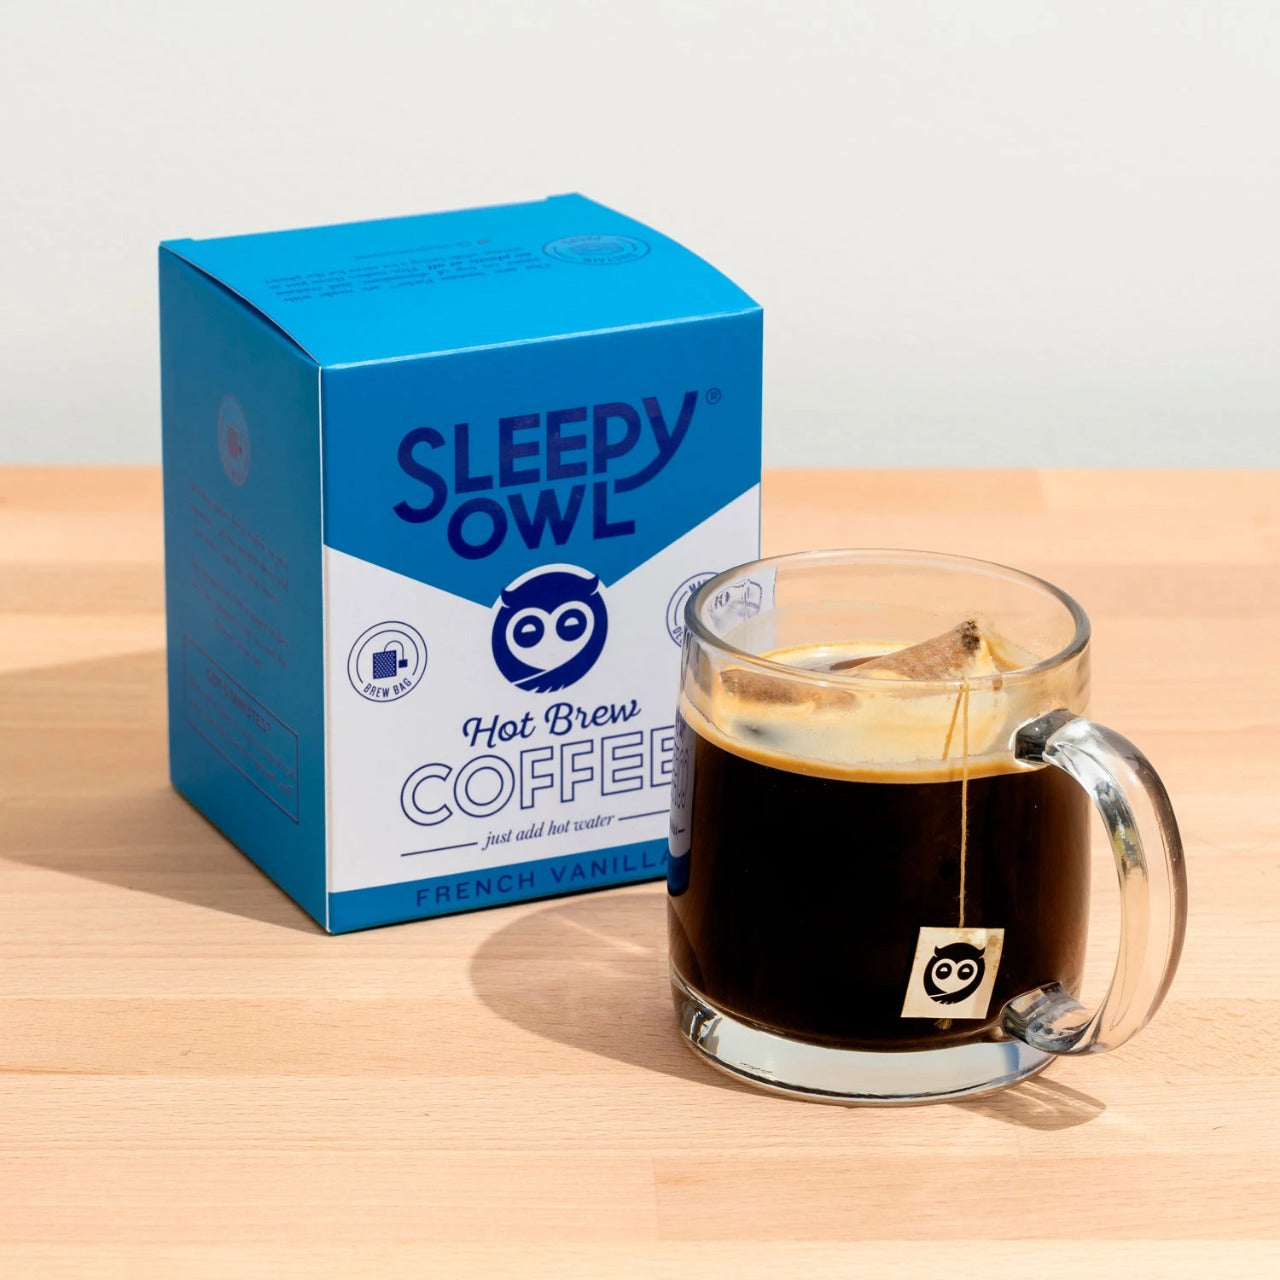 Sleepy Owl Hot Brew French Vanilla Coffee (Set Of 10 Per Unit)